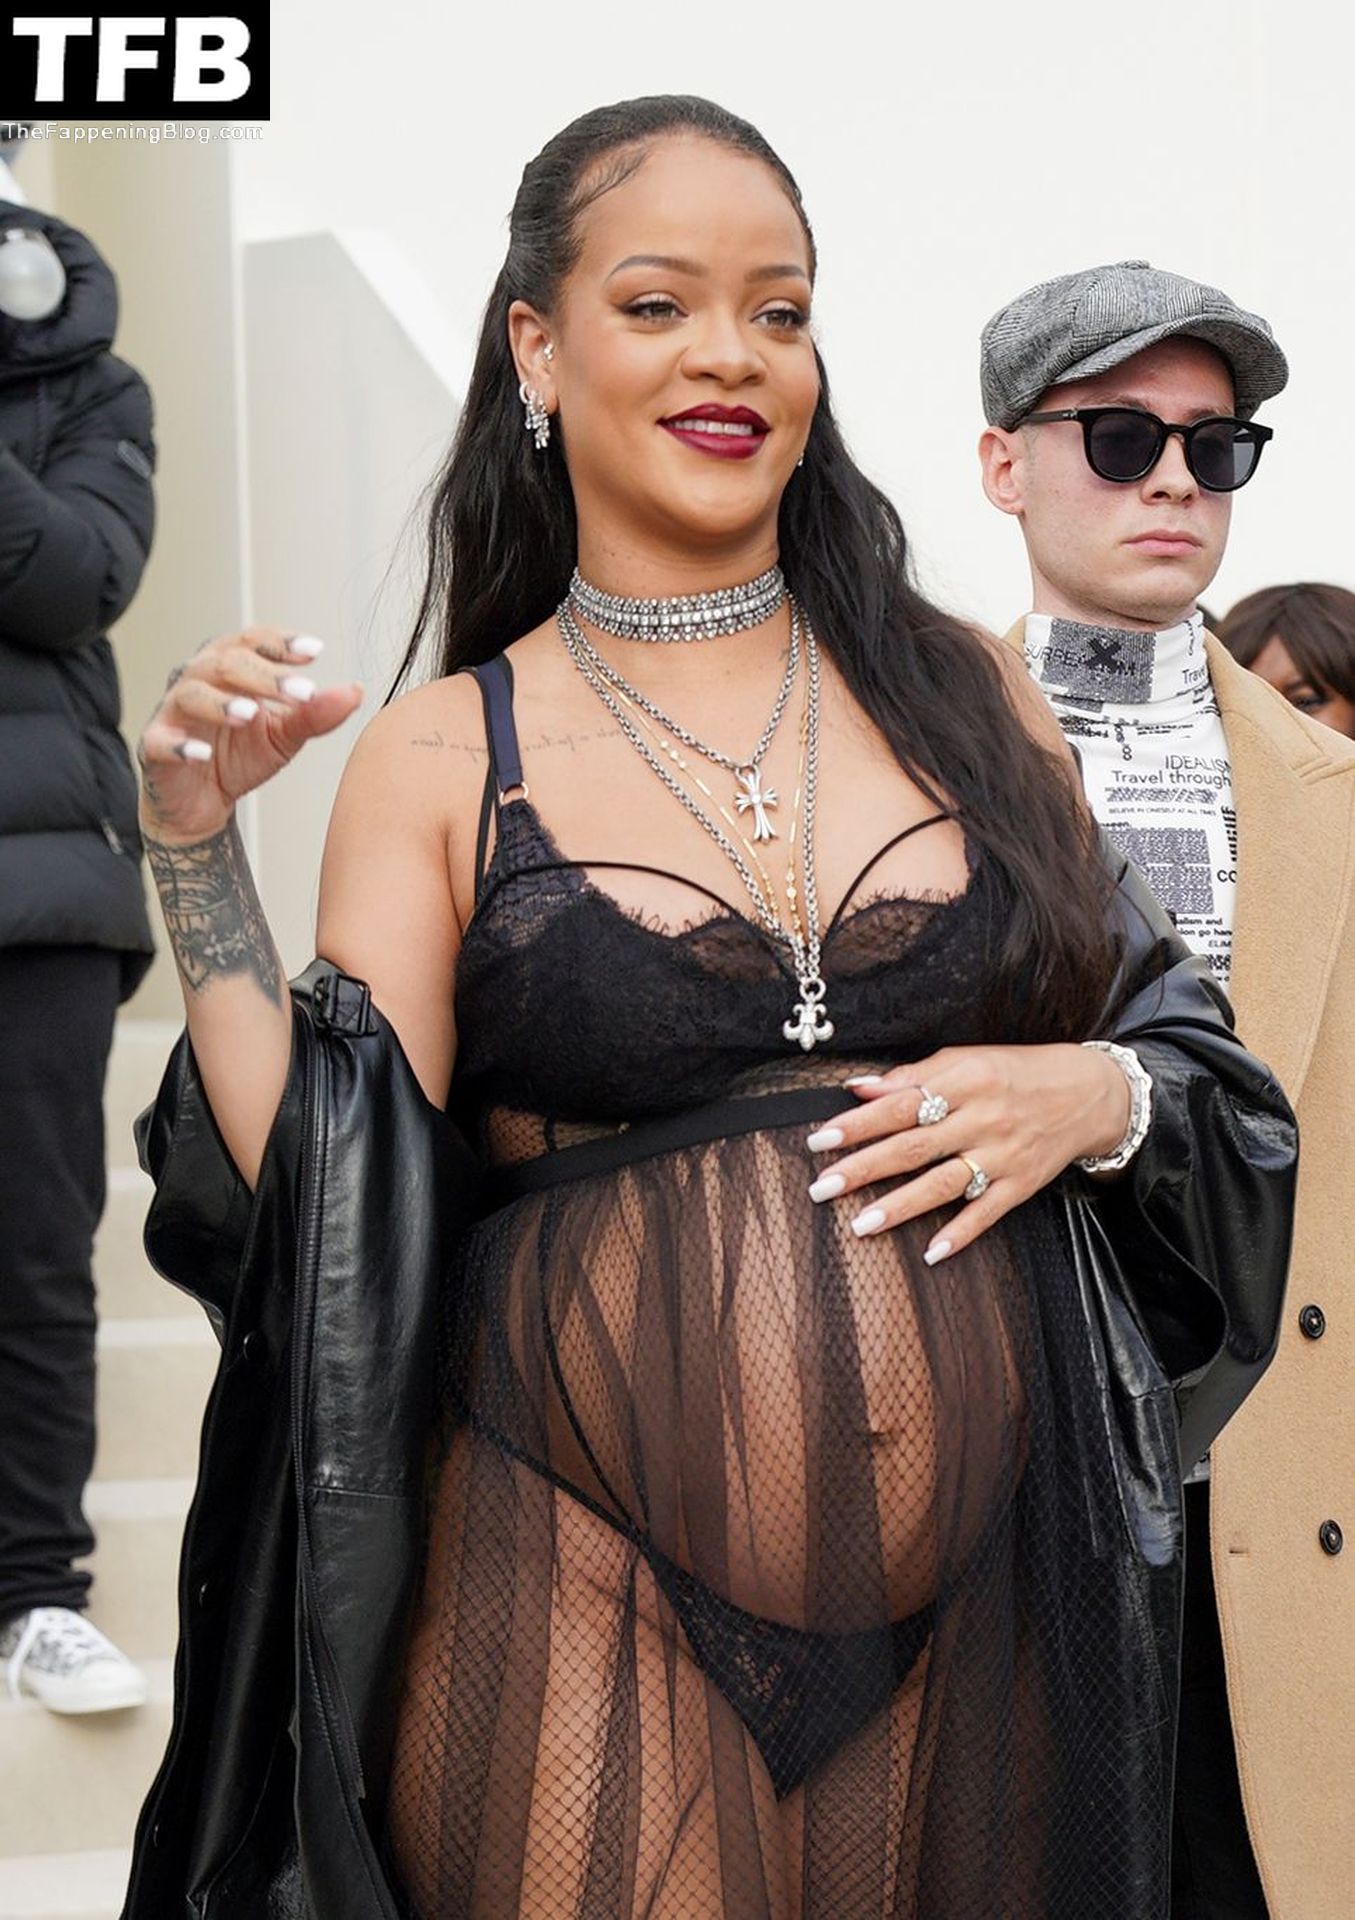 Rihanna-Sexy-The-Fappening-Blog-41-1.jpg